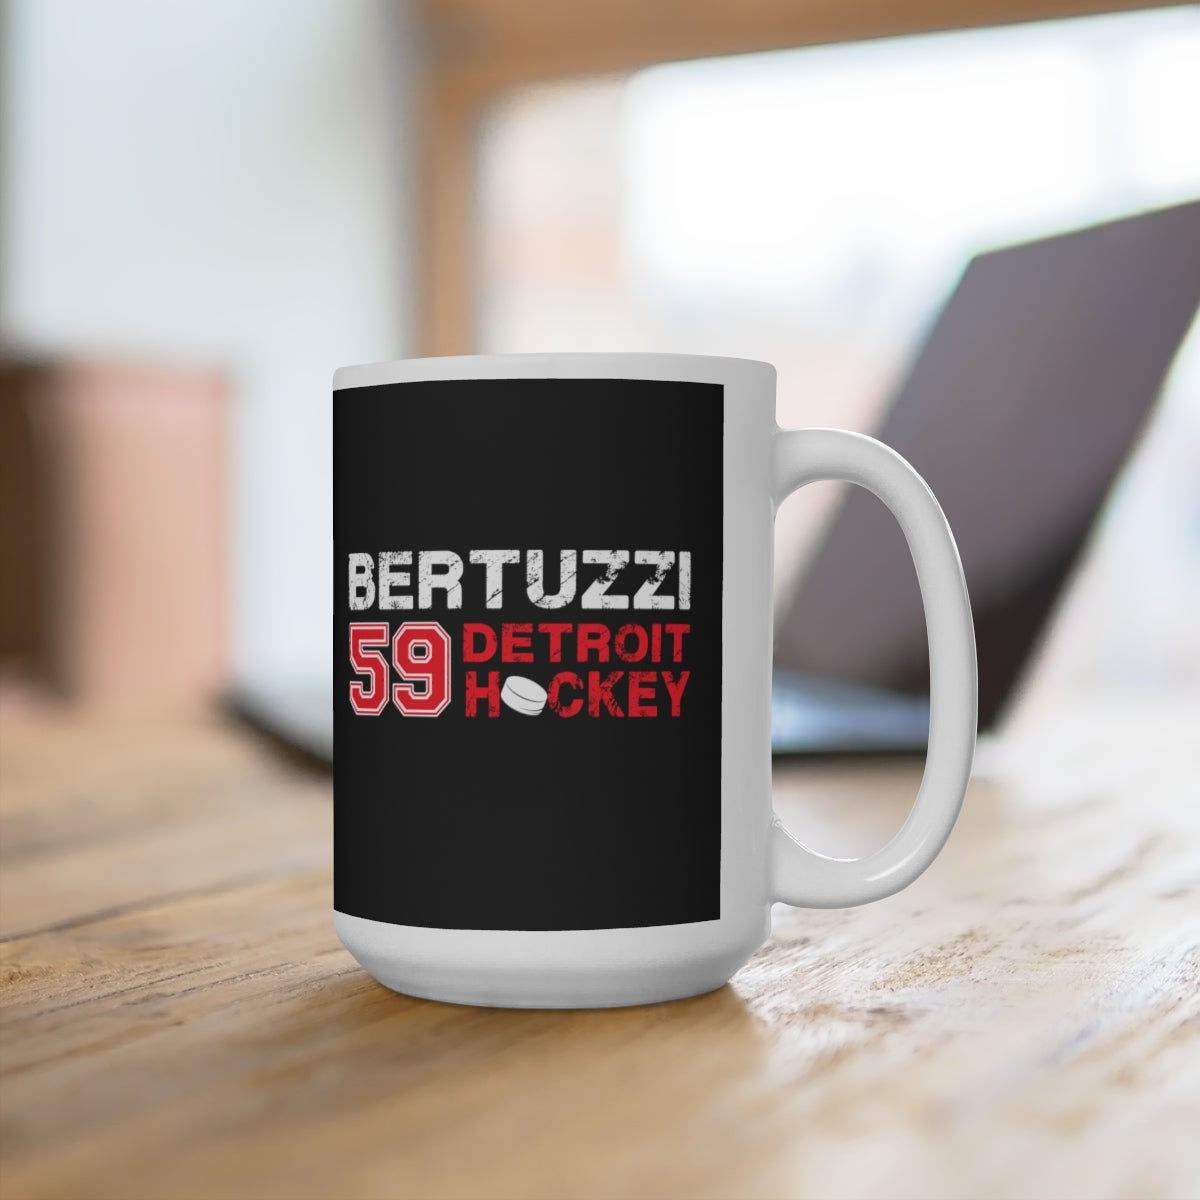 Bertuzzi 59 Detroit Hockey Ceramic Coffee Mug In Black, 15oz